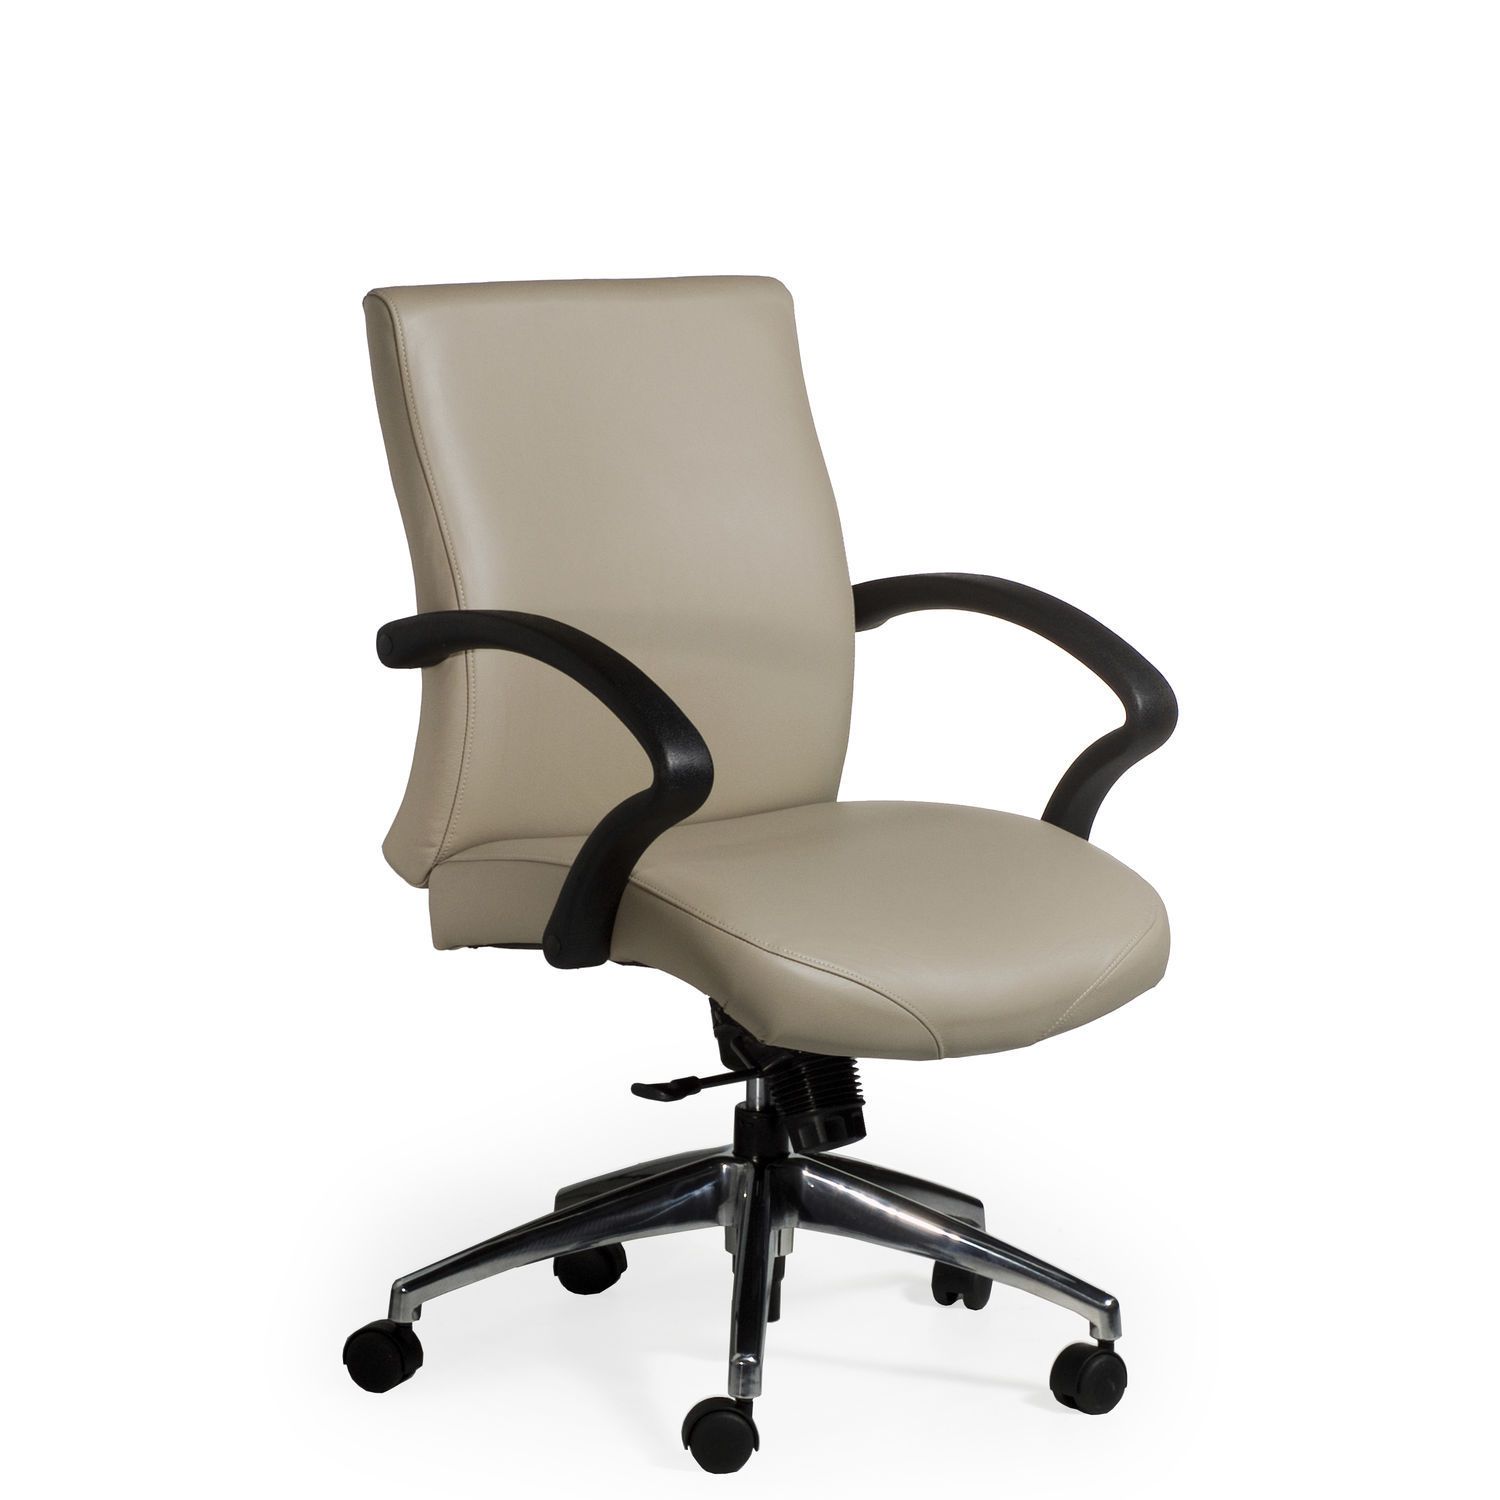 Executive chair / office / on casters / with armrests Endure EN2483, Endure EN2485 La-Z-Boy Contract Furniture